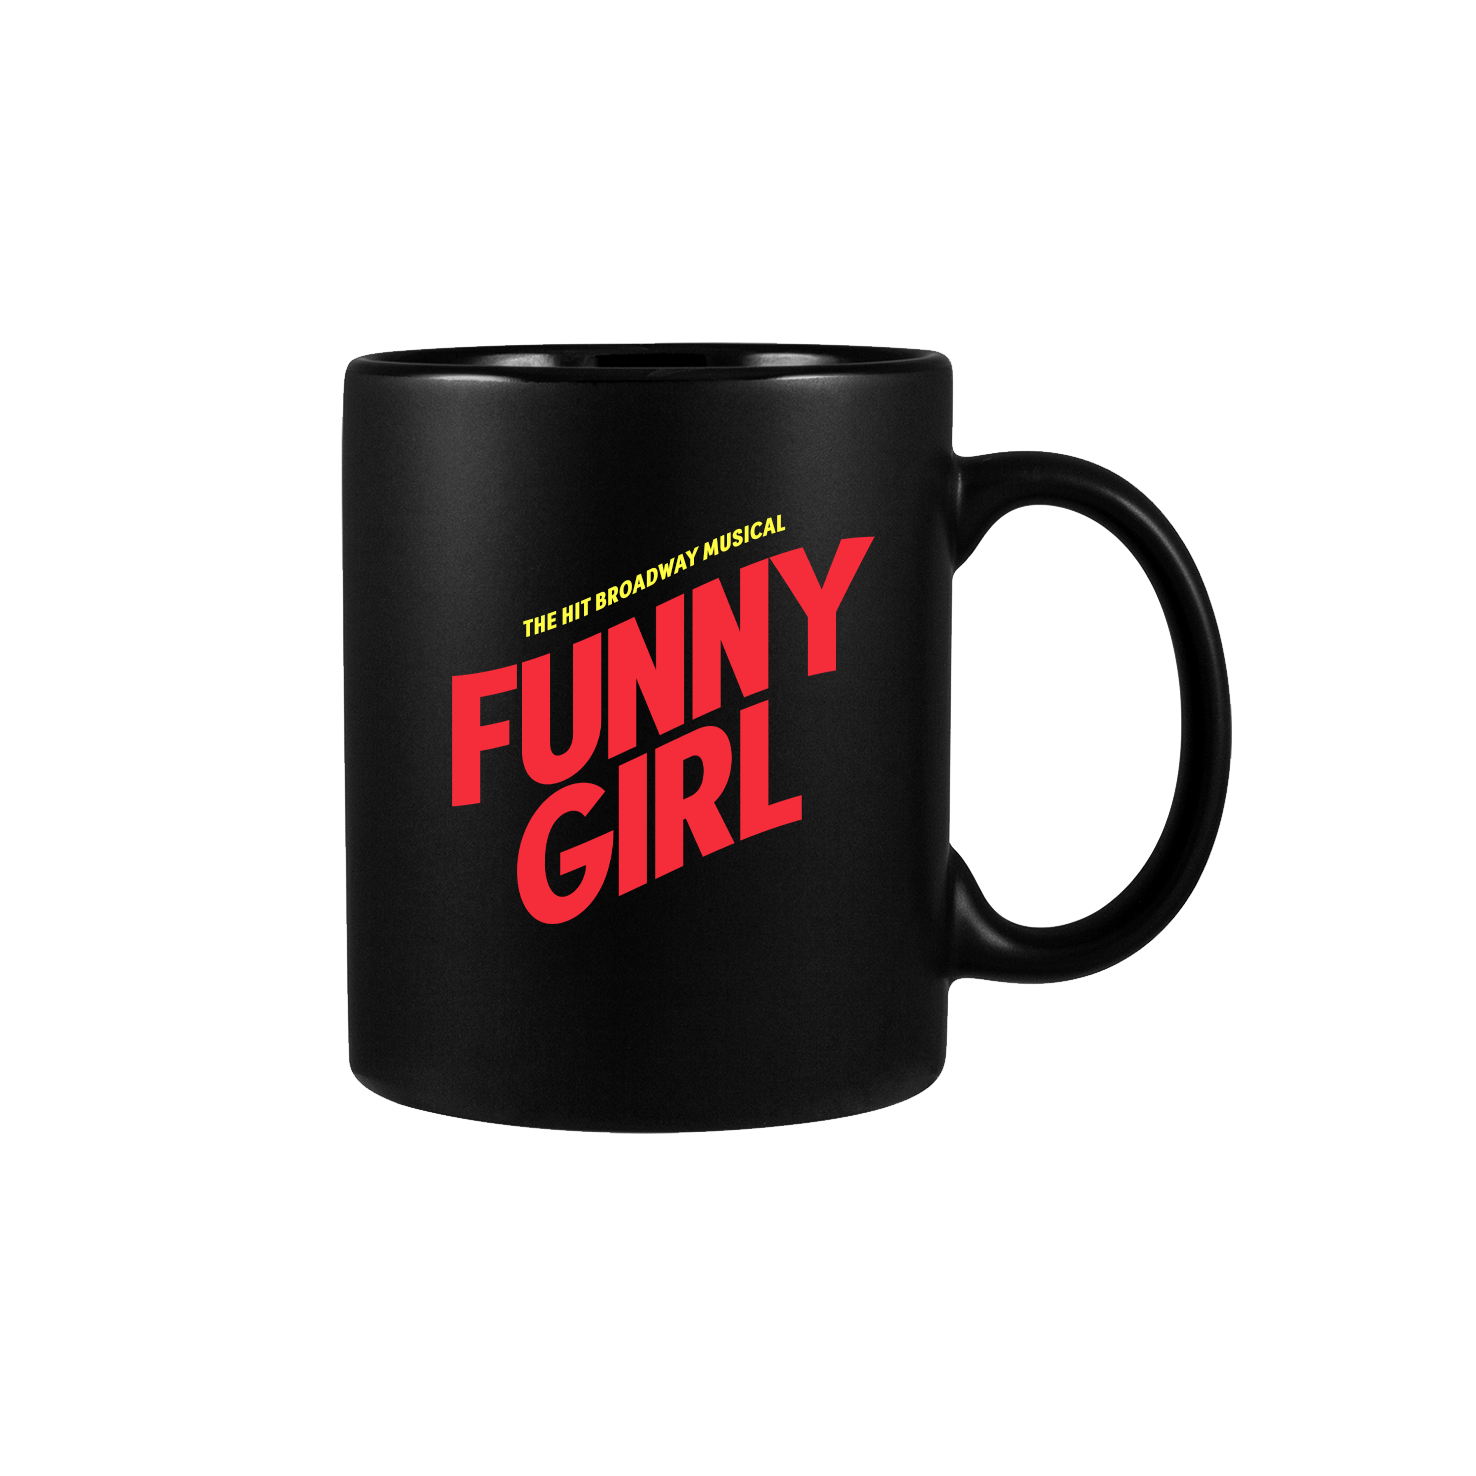 MEAN GIRLS Mug – Broadway Merchandise Shop by Creative Goods